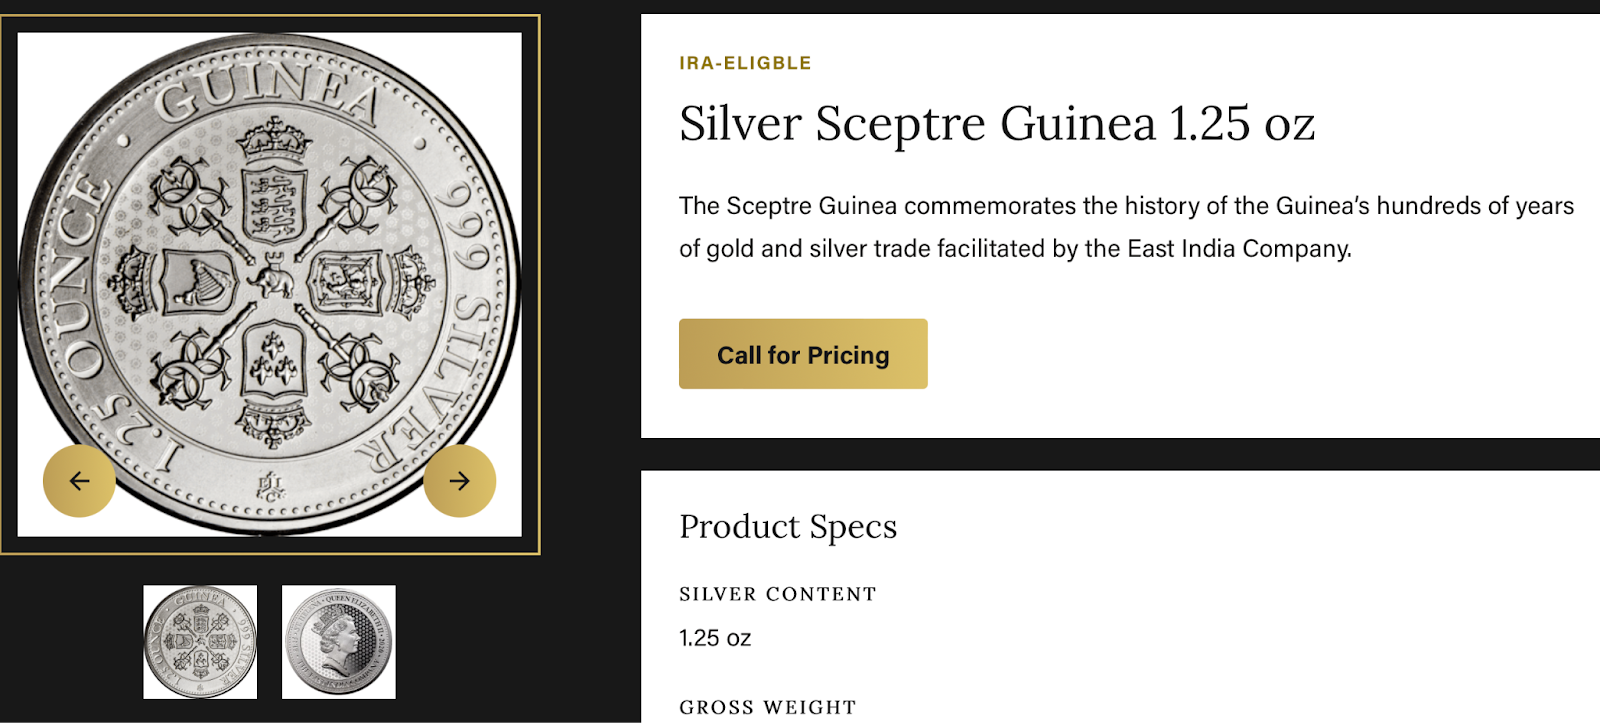 silver sceptre guinea 1.25 oz